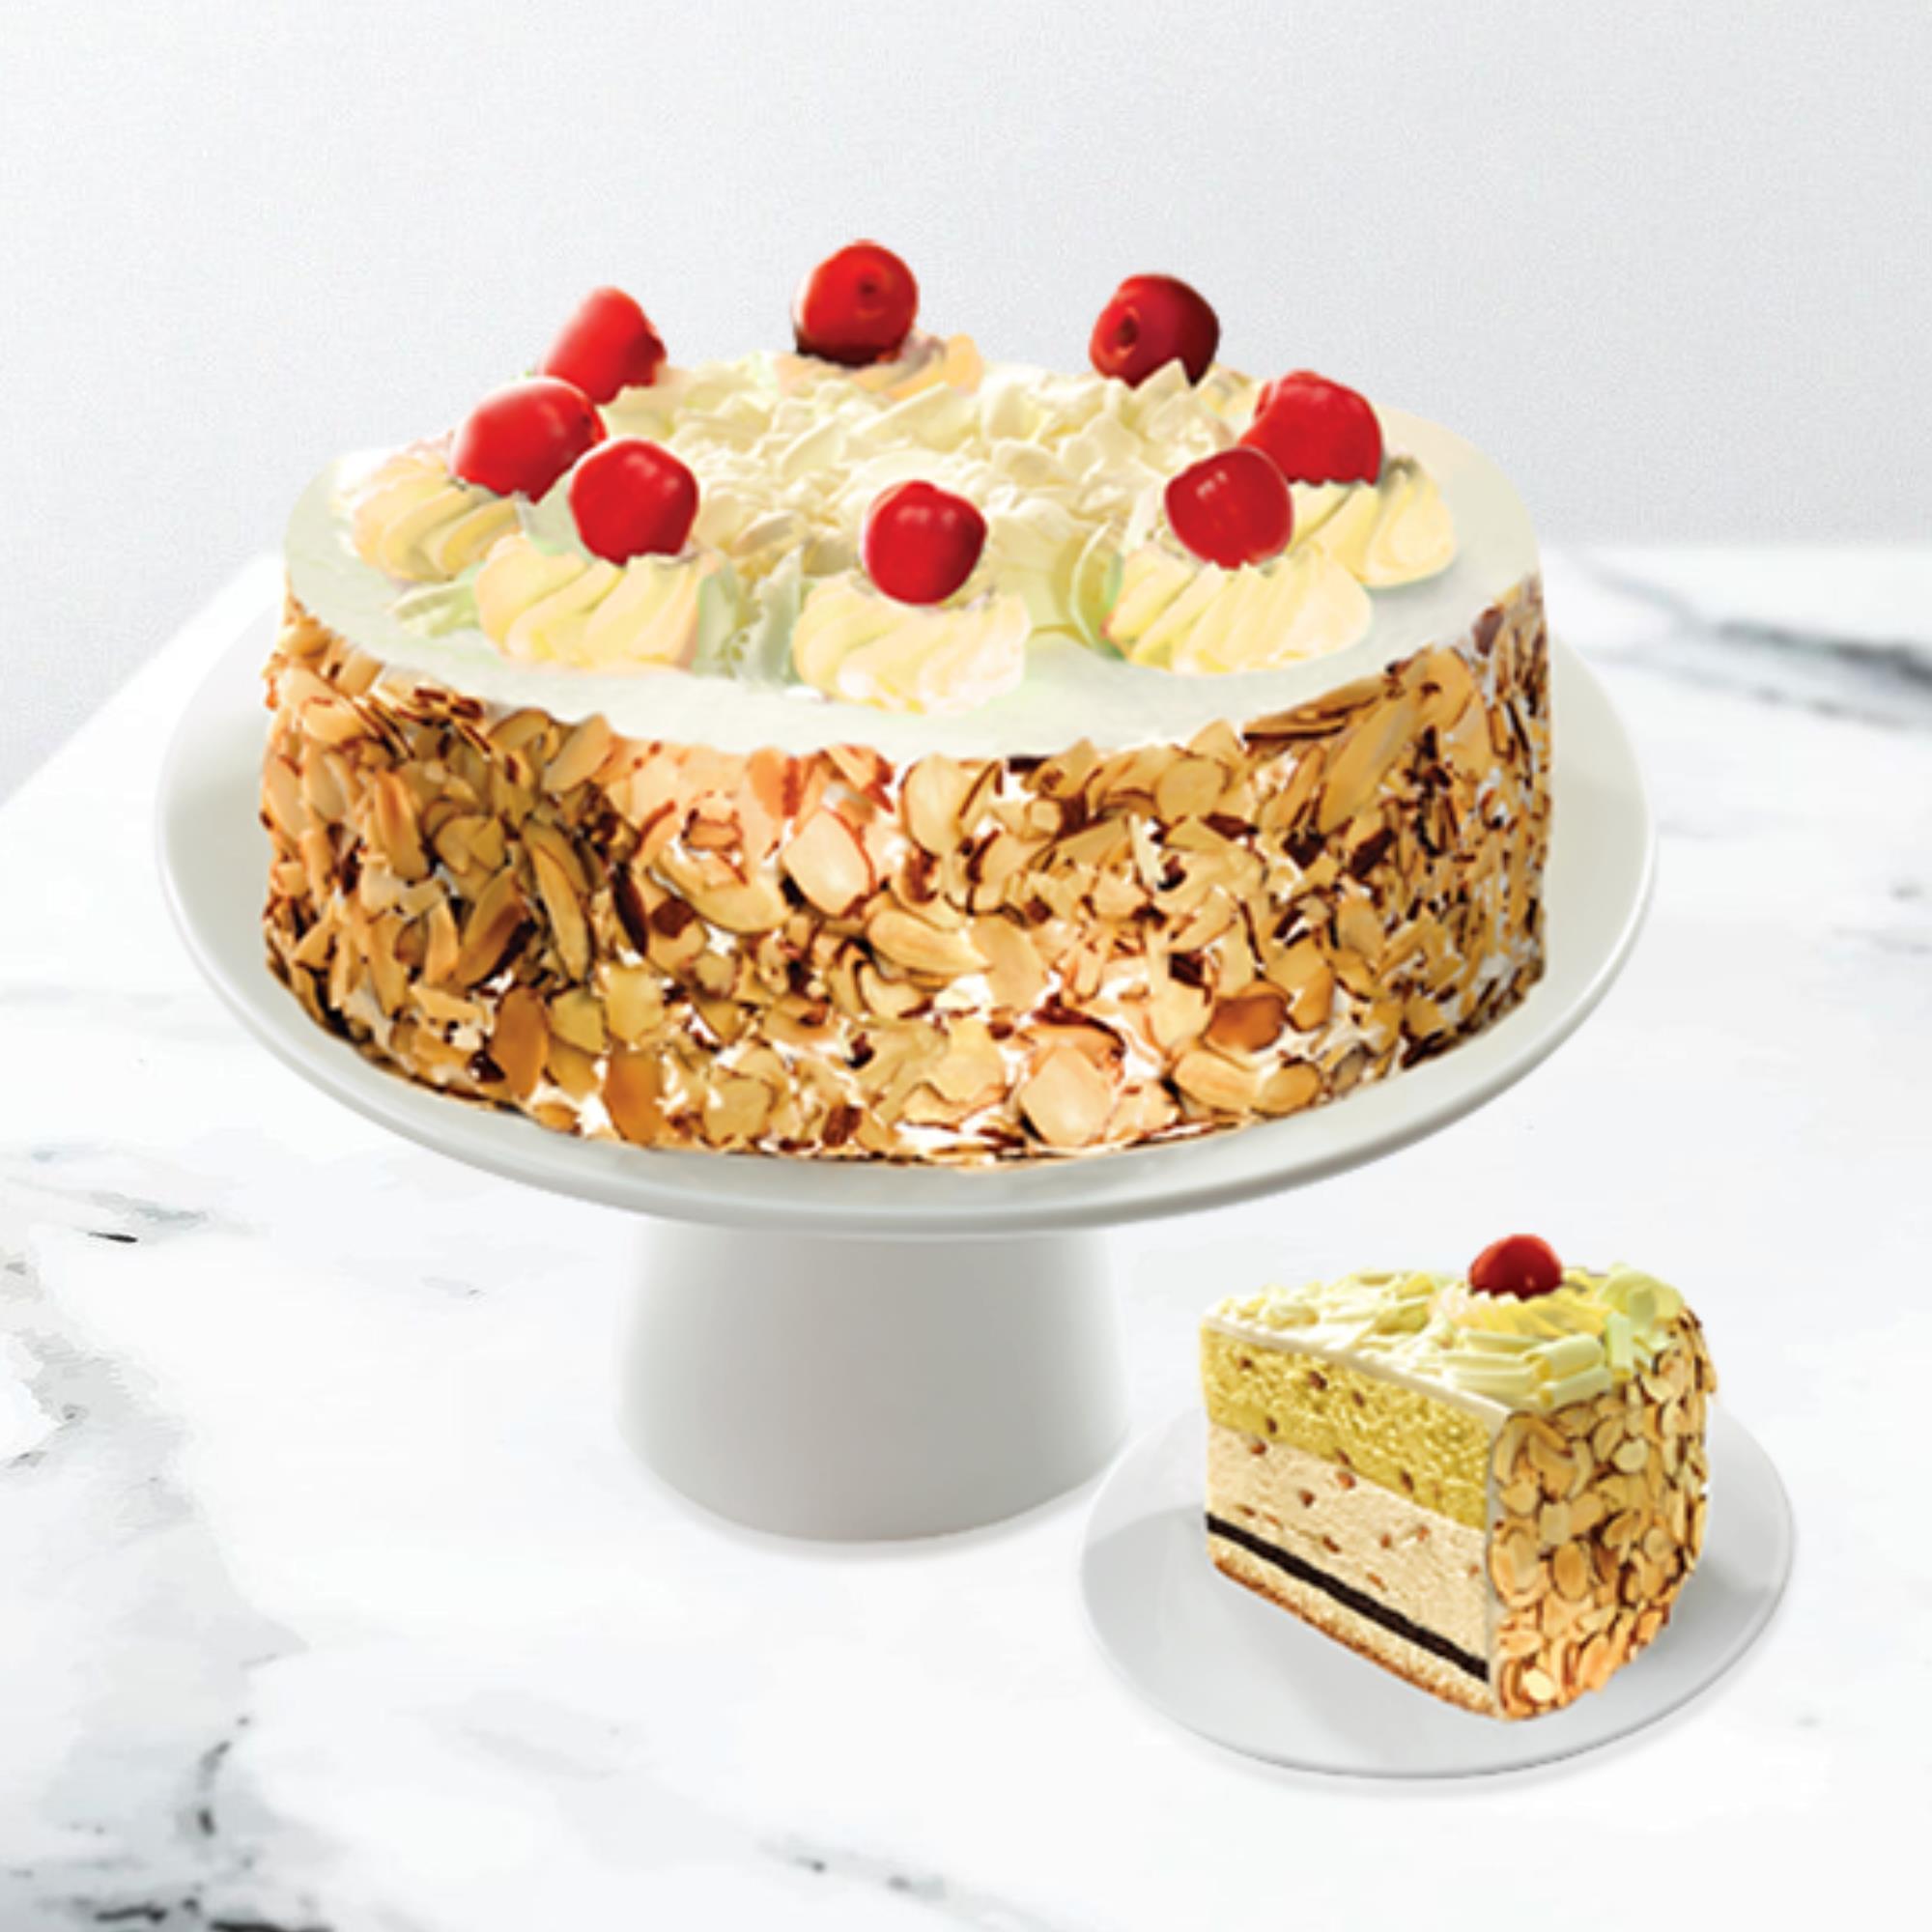 Icecream cake | Ice cream cake, Snack recipes, Desserts